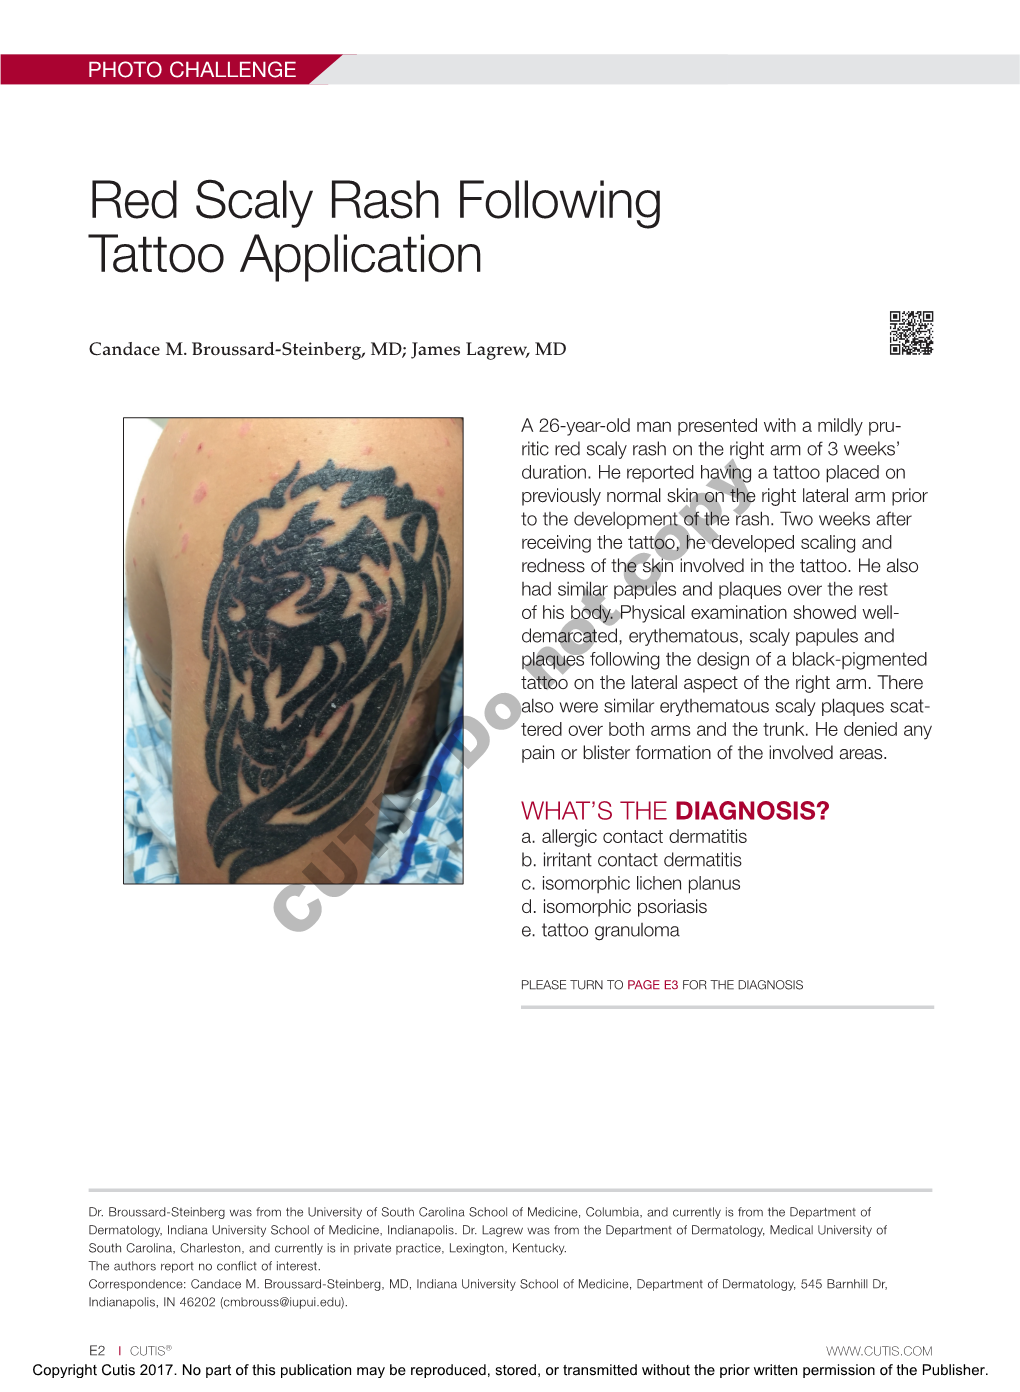 Red Scaly Rash Following Tattoo Application